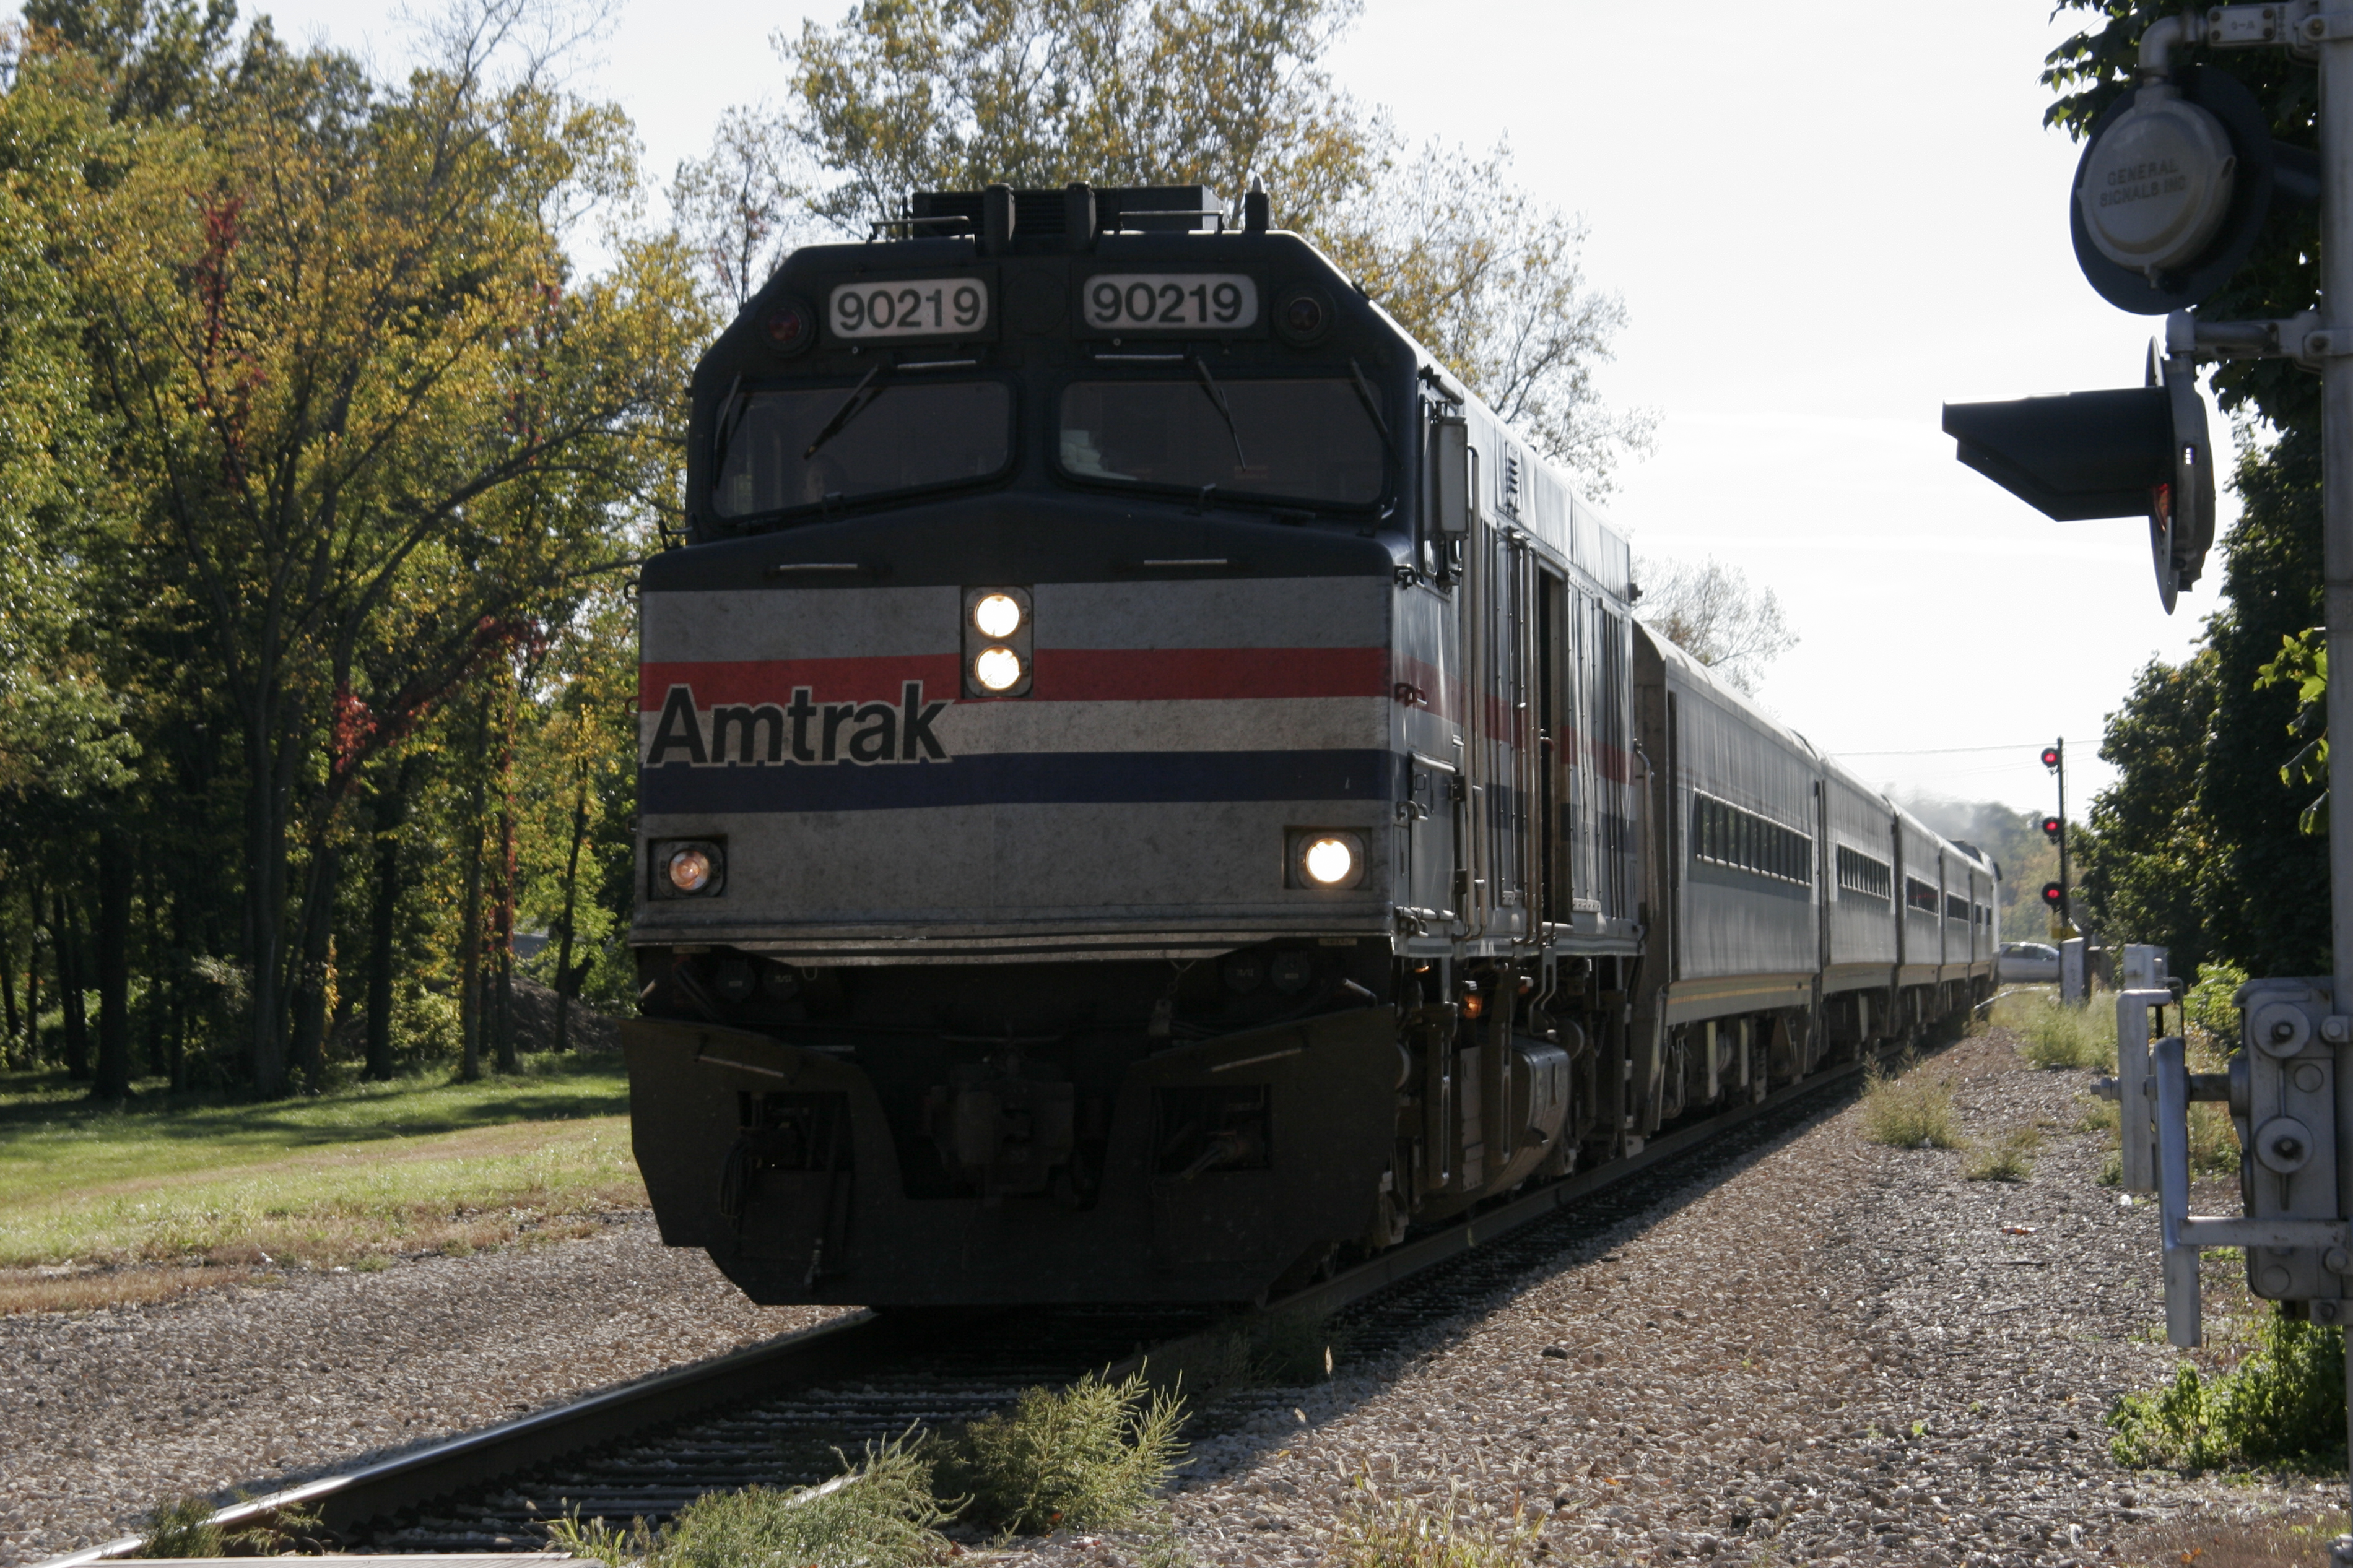 An Amtrak train.